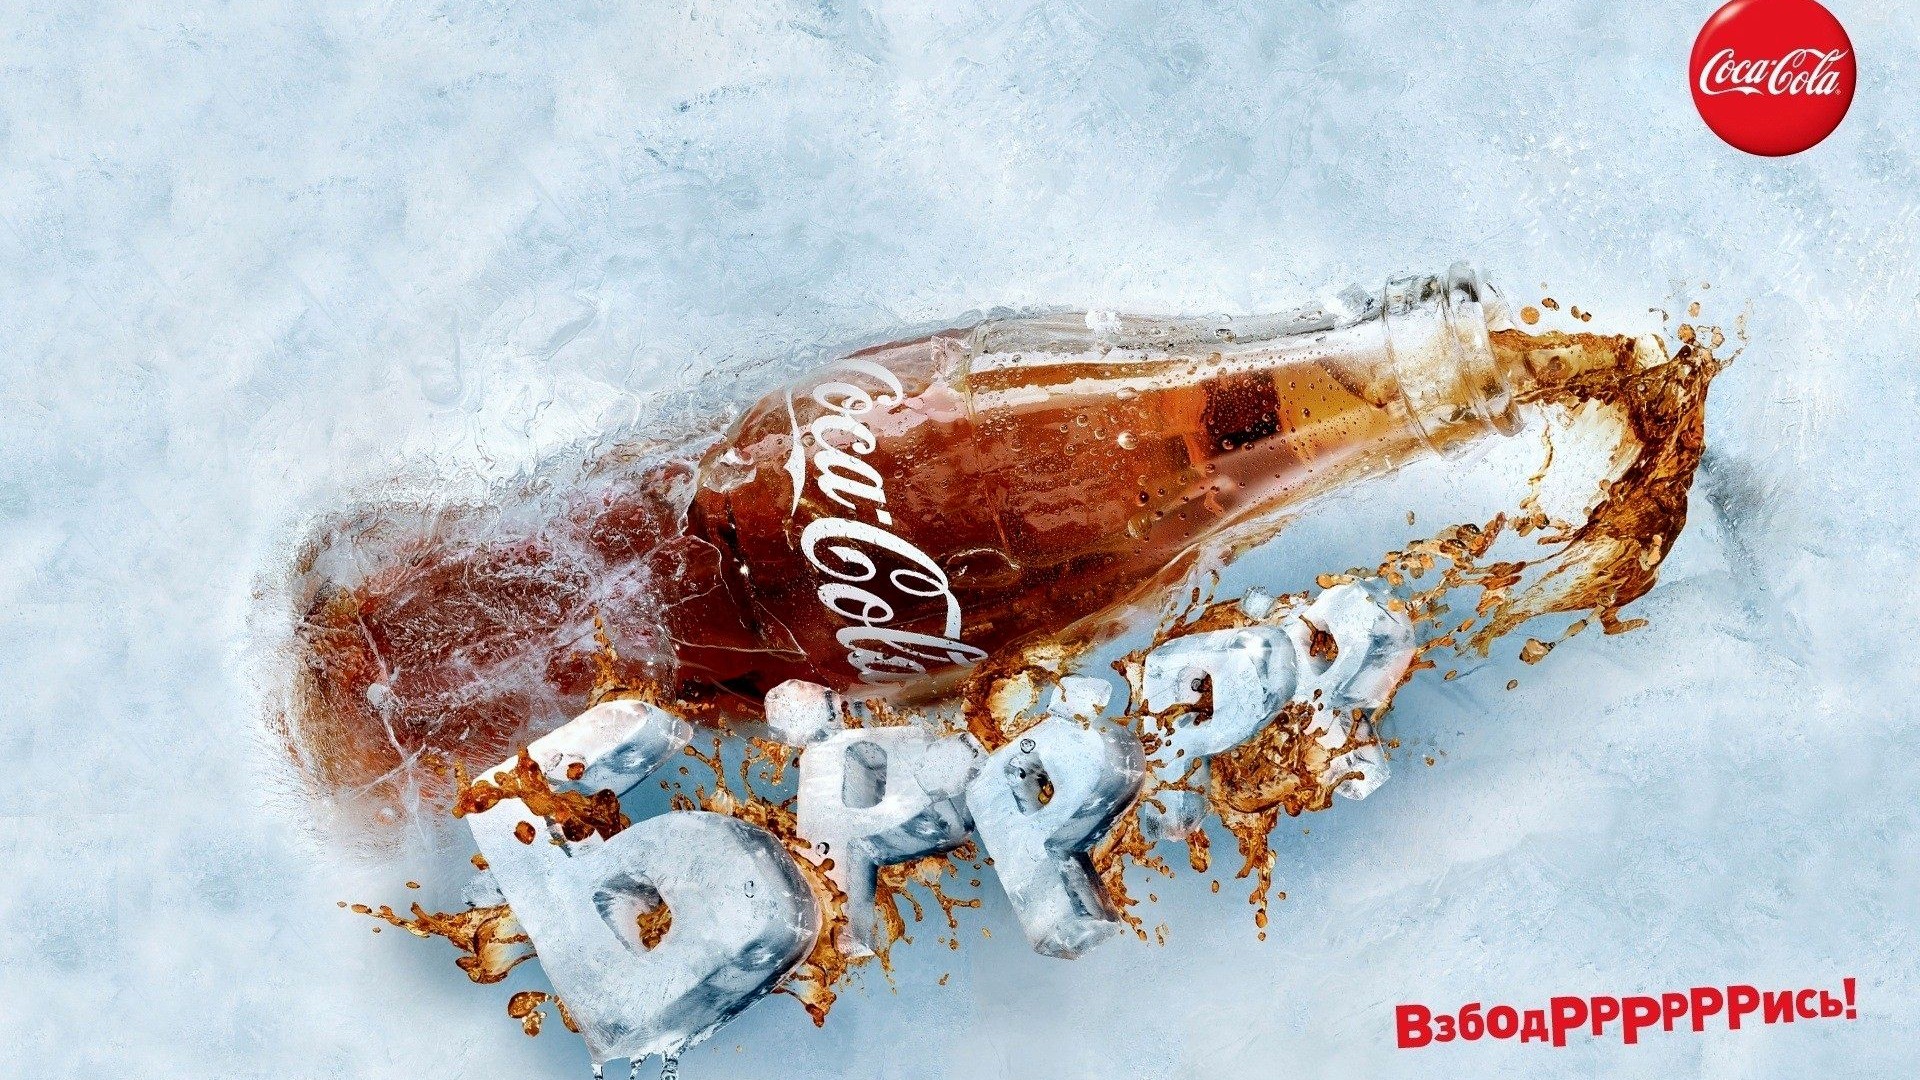 Coca-Cola 可口可樂精美廣告壁紙 #8 - 1920x1080